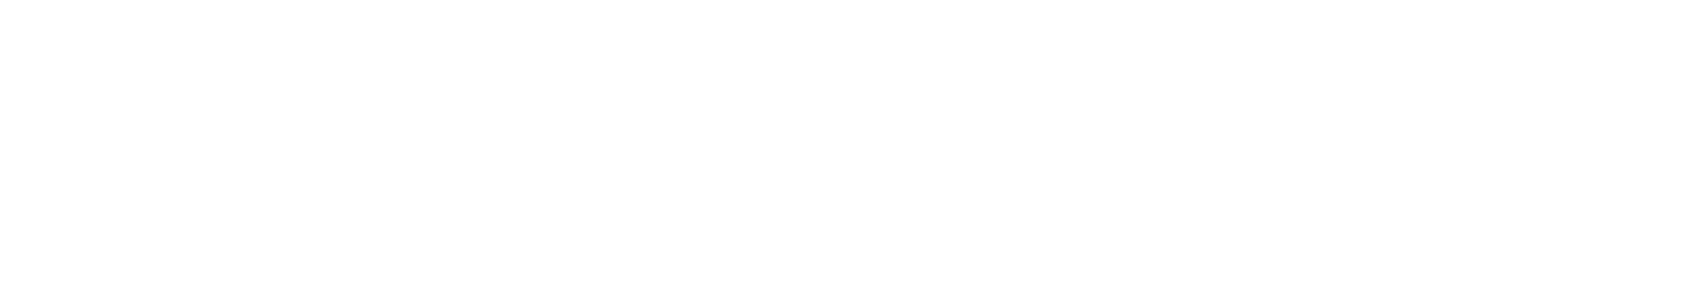 Uk Daily News